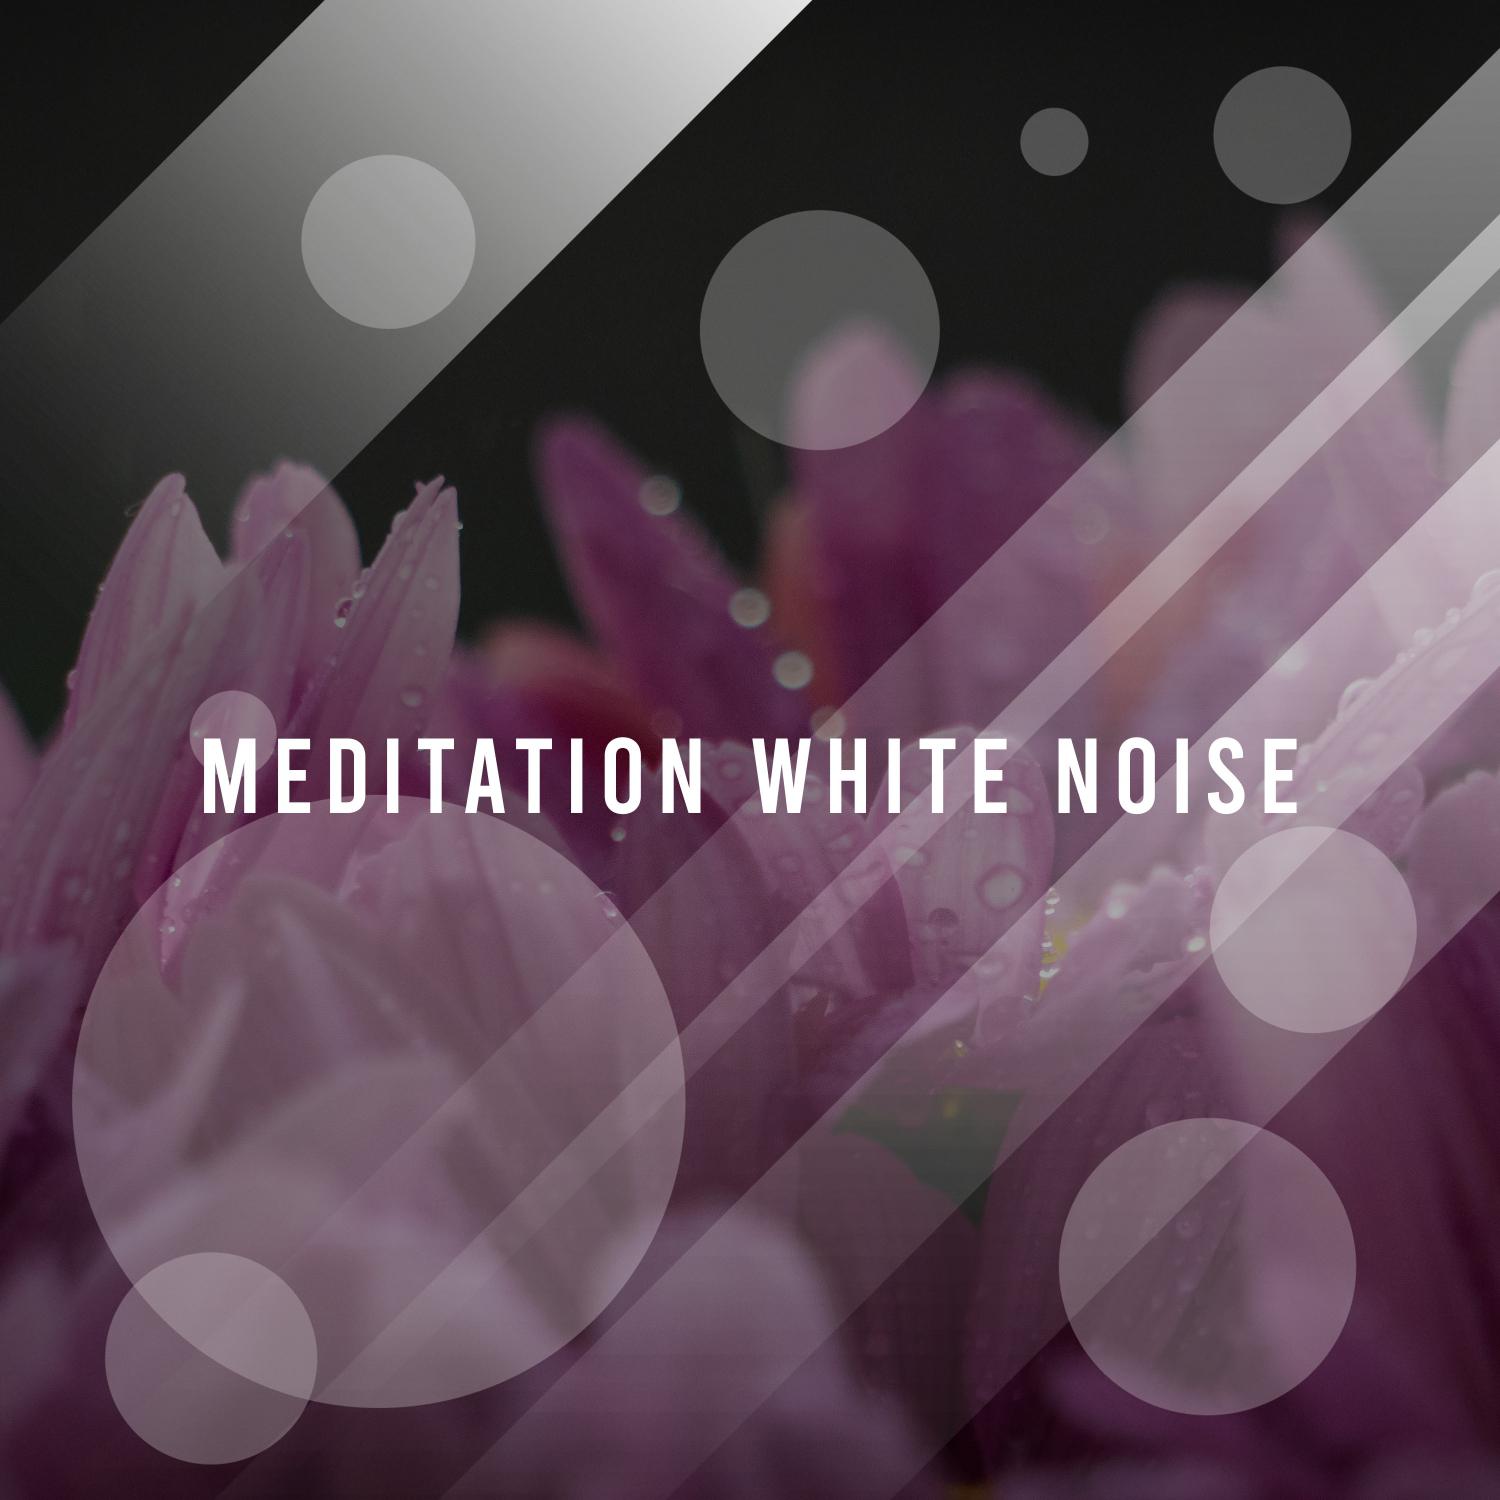 12 Meditation White Noise Sounds - White Noise Rain